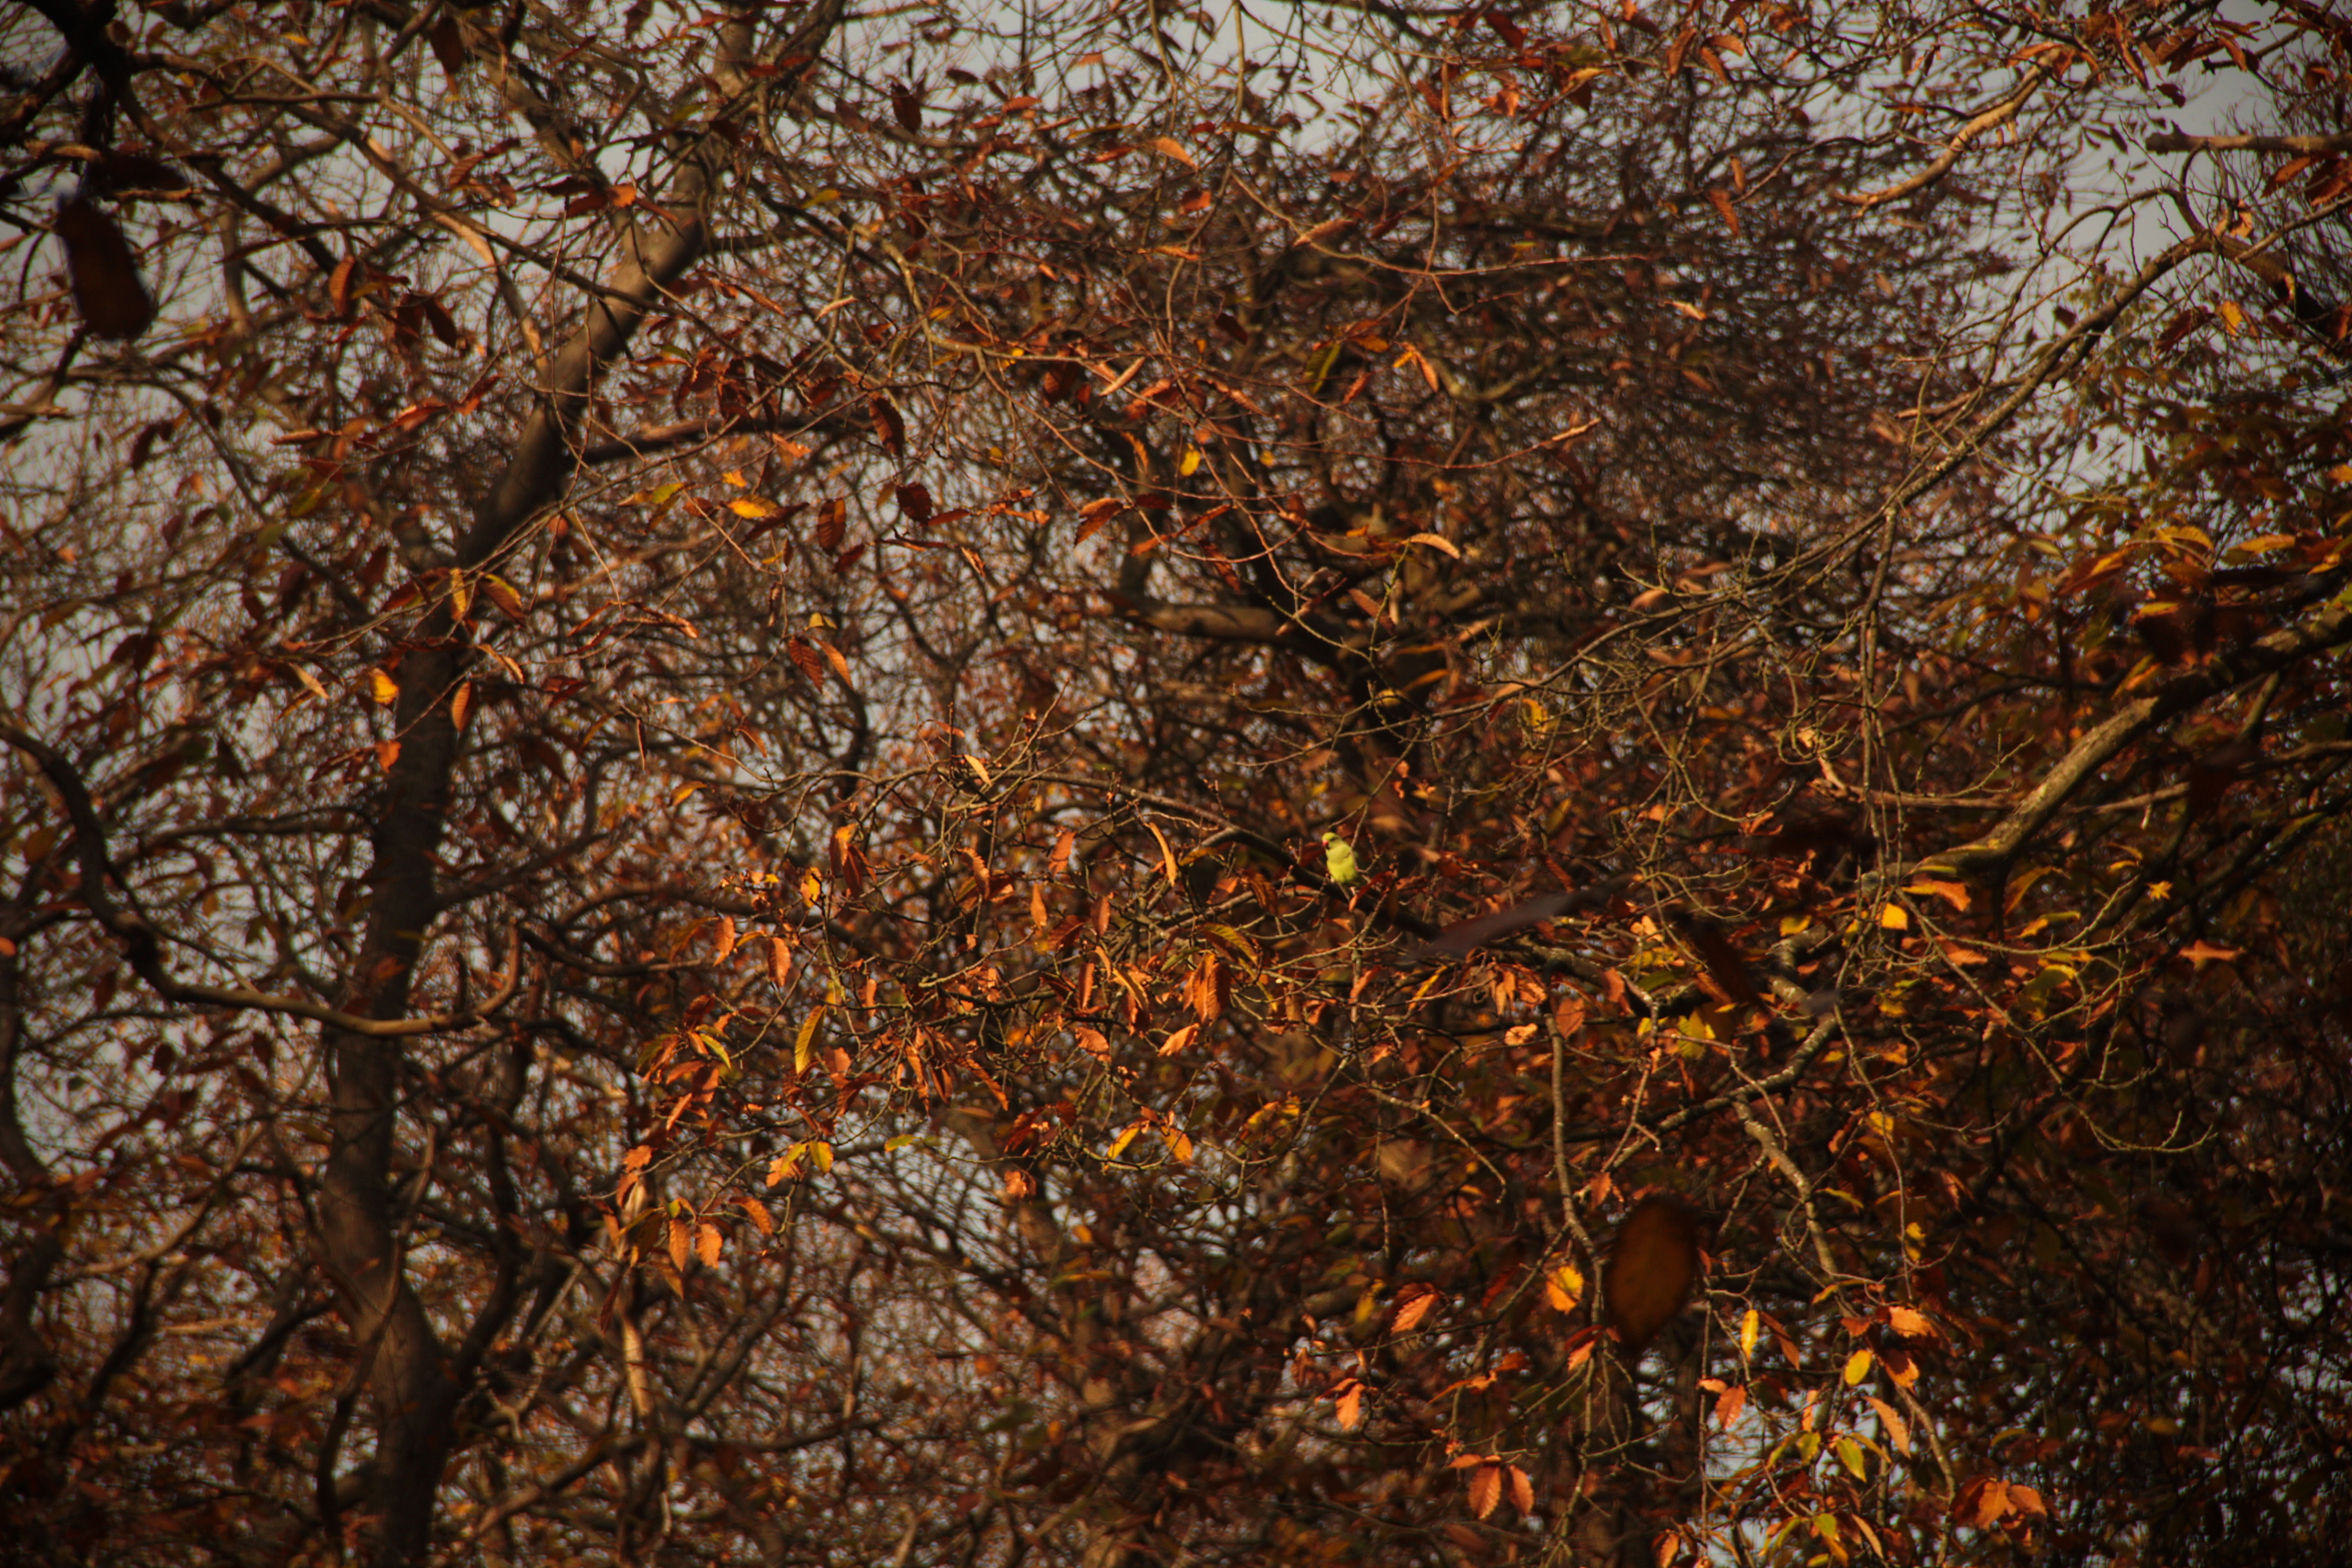 Parakeet illuminated amongst the branches.